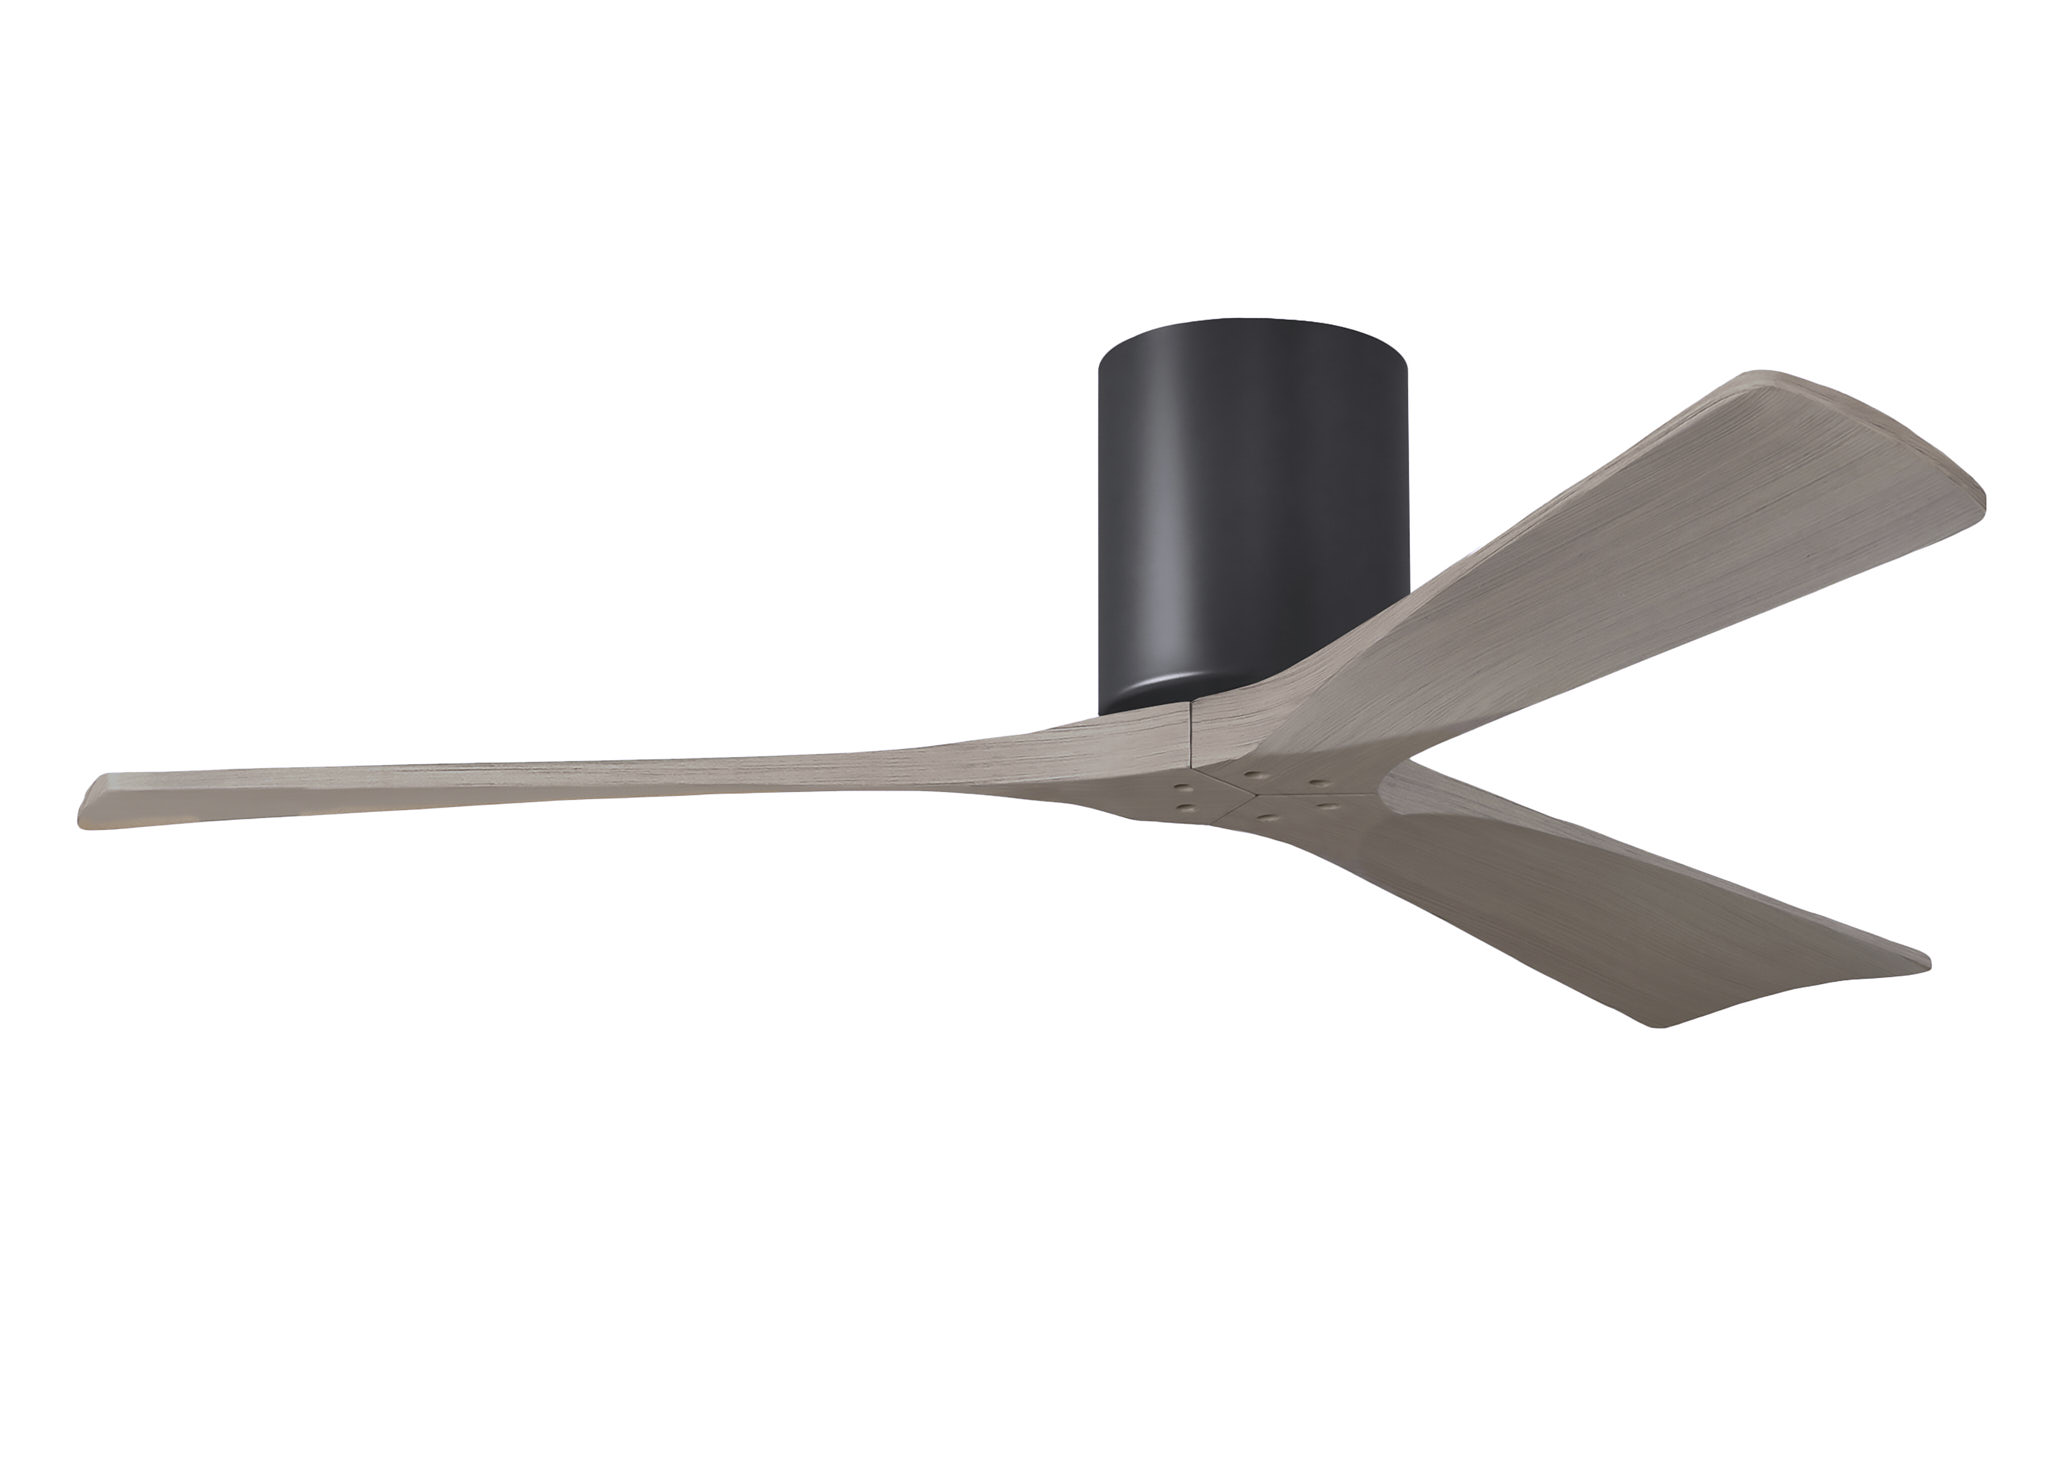 Irene-3H 6-speed ceiling fan in matte black finish with 52